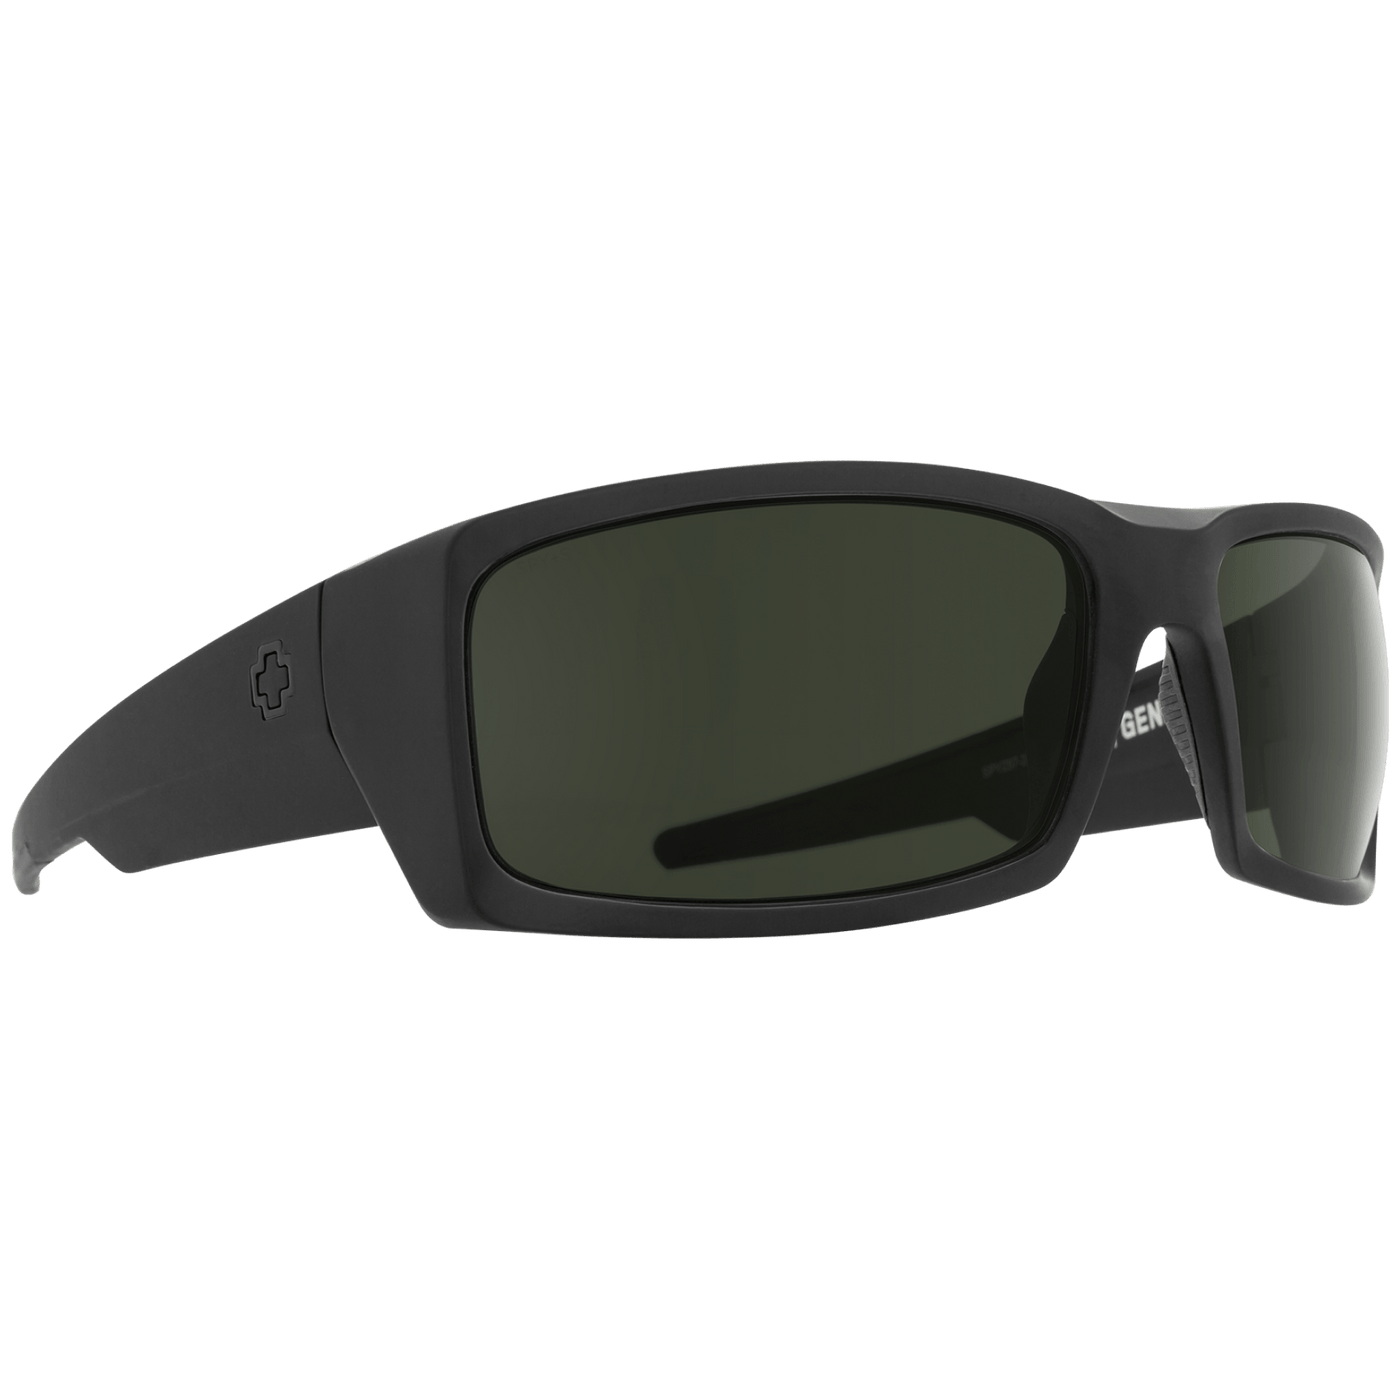 SPY GENERAL Sunglasses, Happy Lens - Soft Matte Black